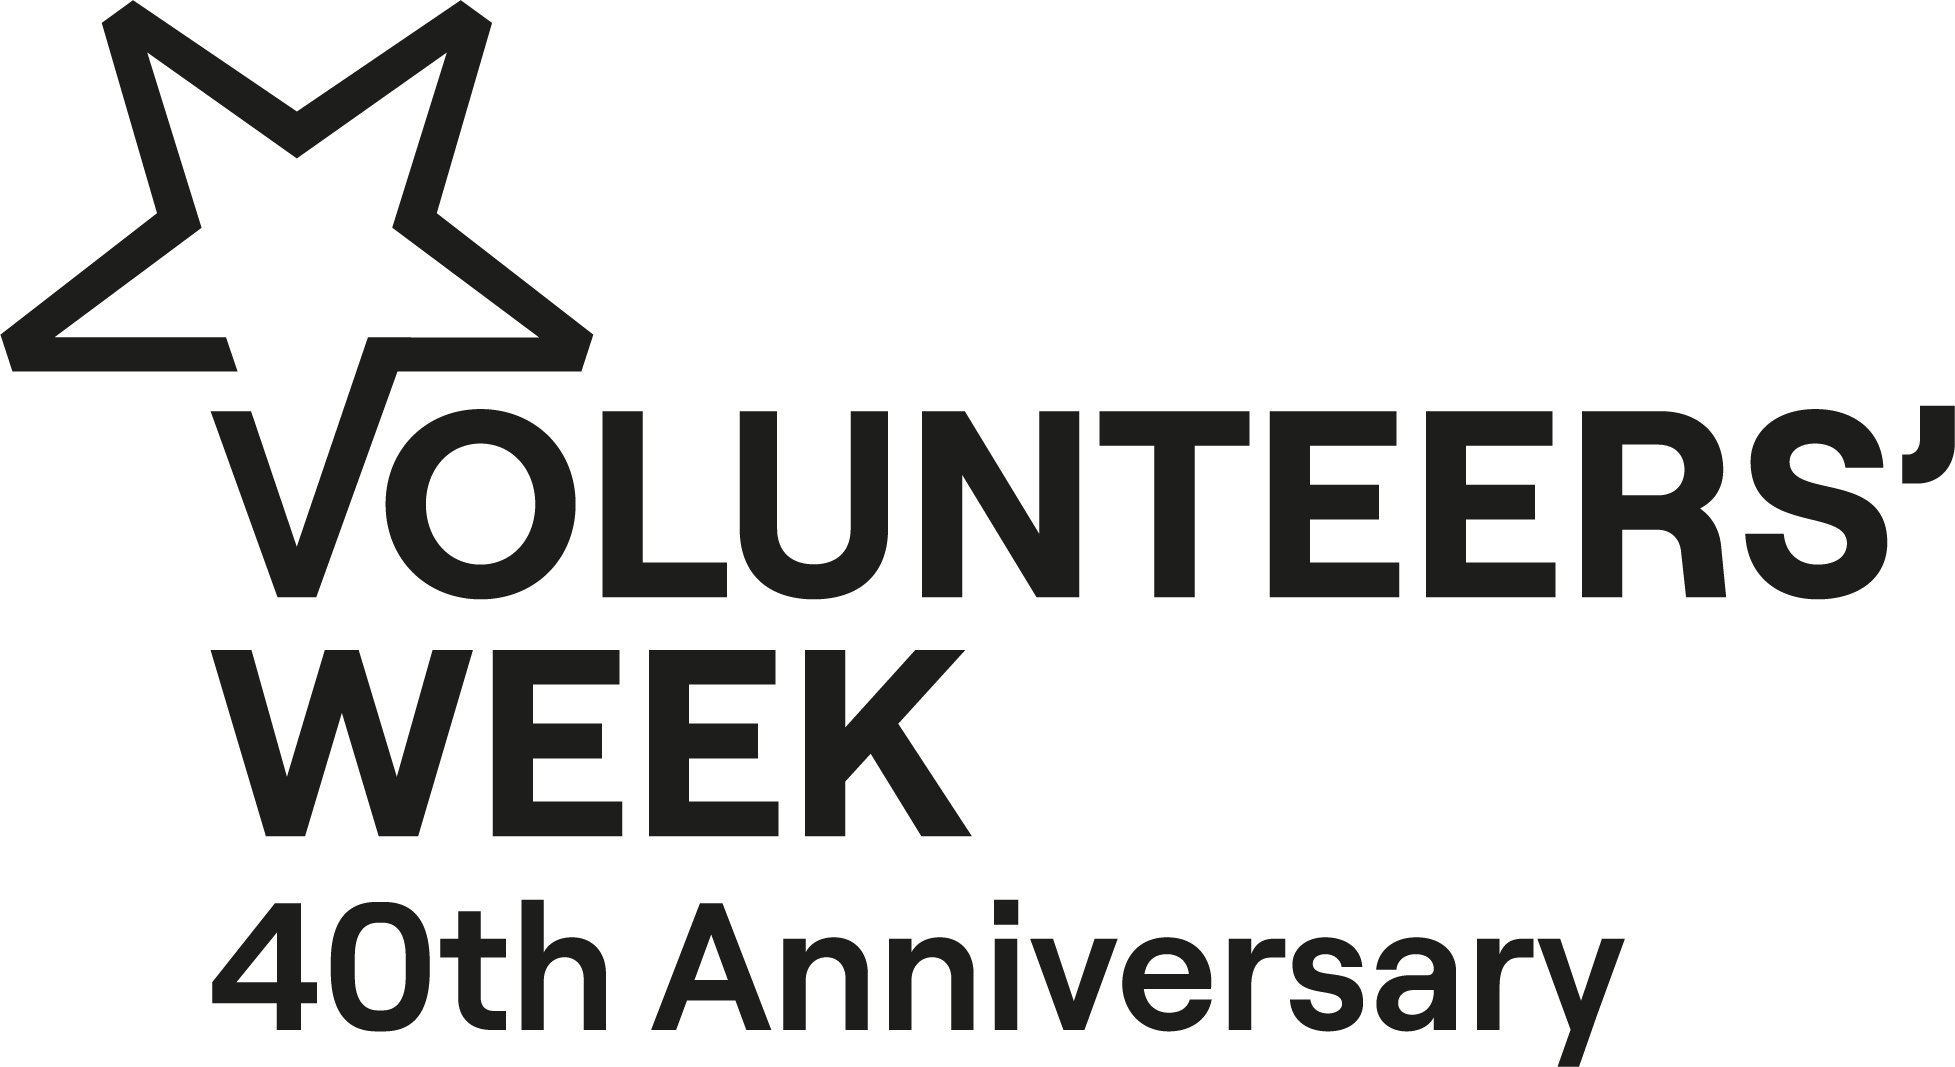 Volunteers' Week 40th Anniversary logo including a star